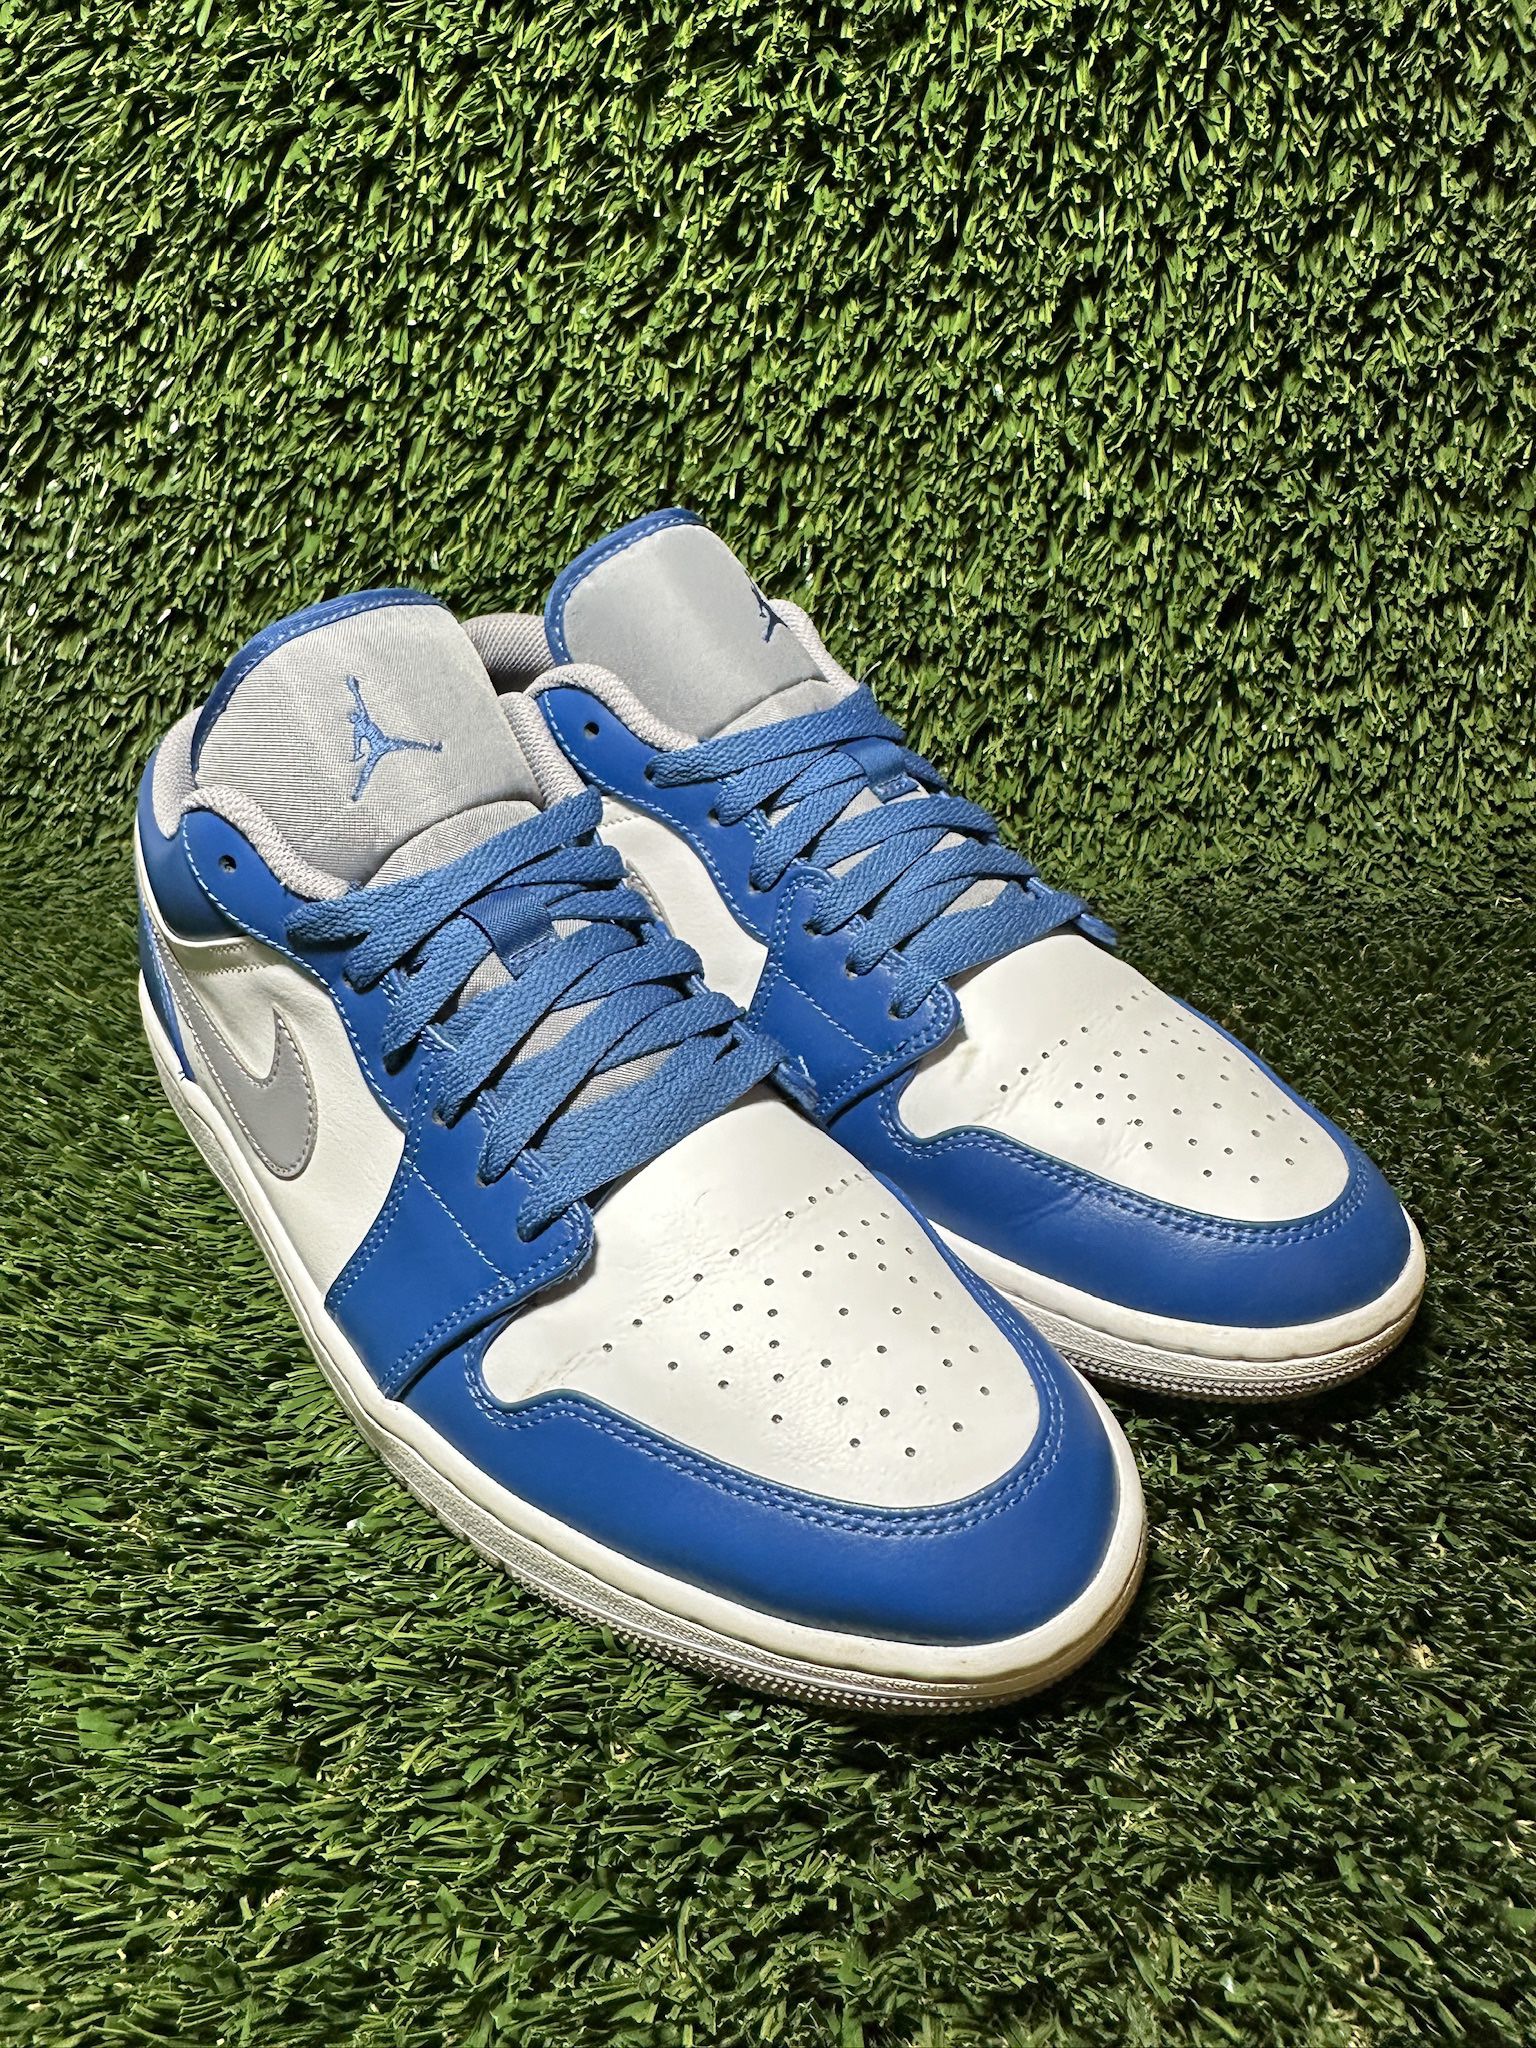 Nike Air Jordan 1 Low True Blue Cement 553558-412 OG I Retro Mens Size 11